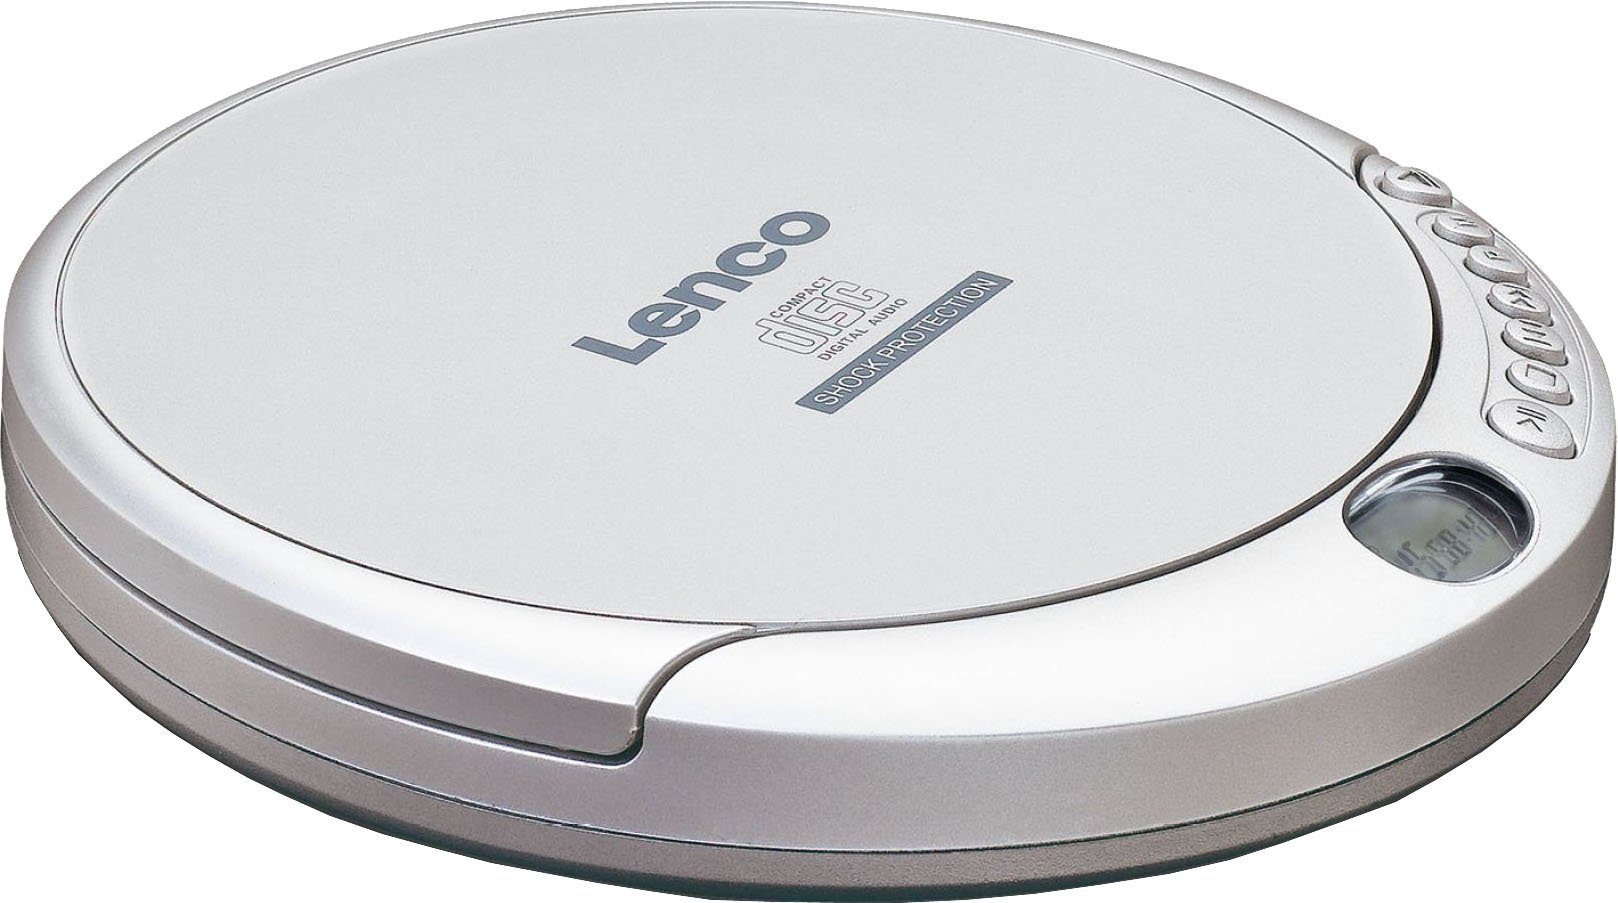 Silber Lenco CD-201Sl (Anti-Schock-Funktion) CD-Player